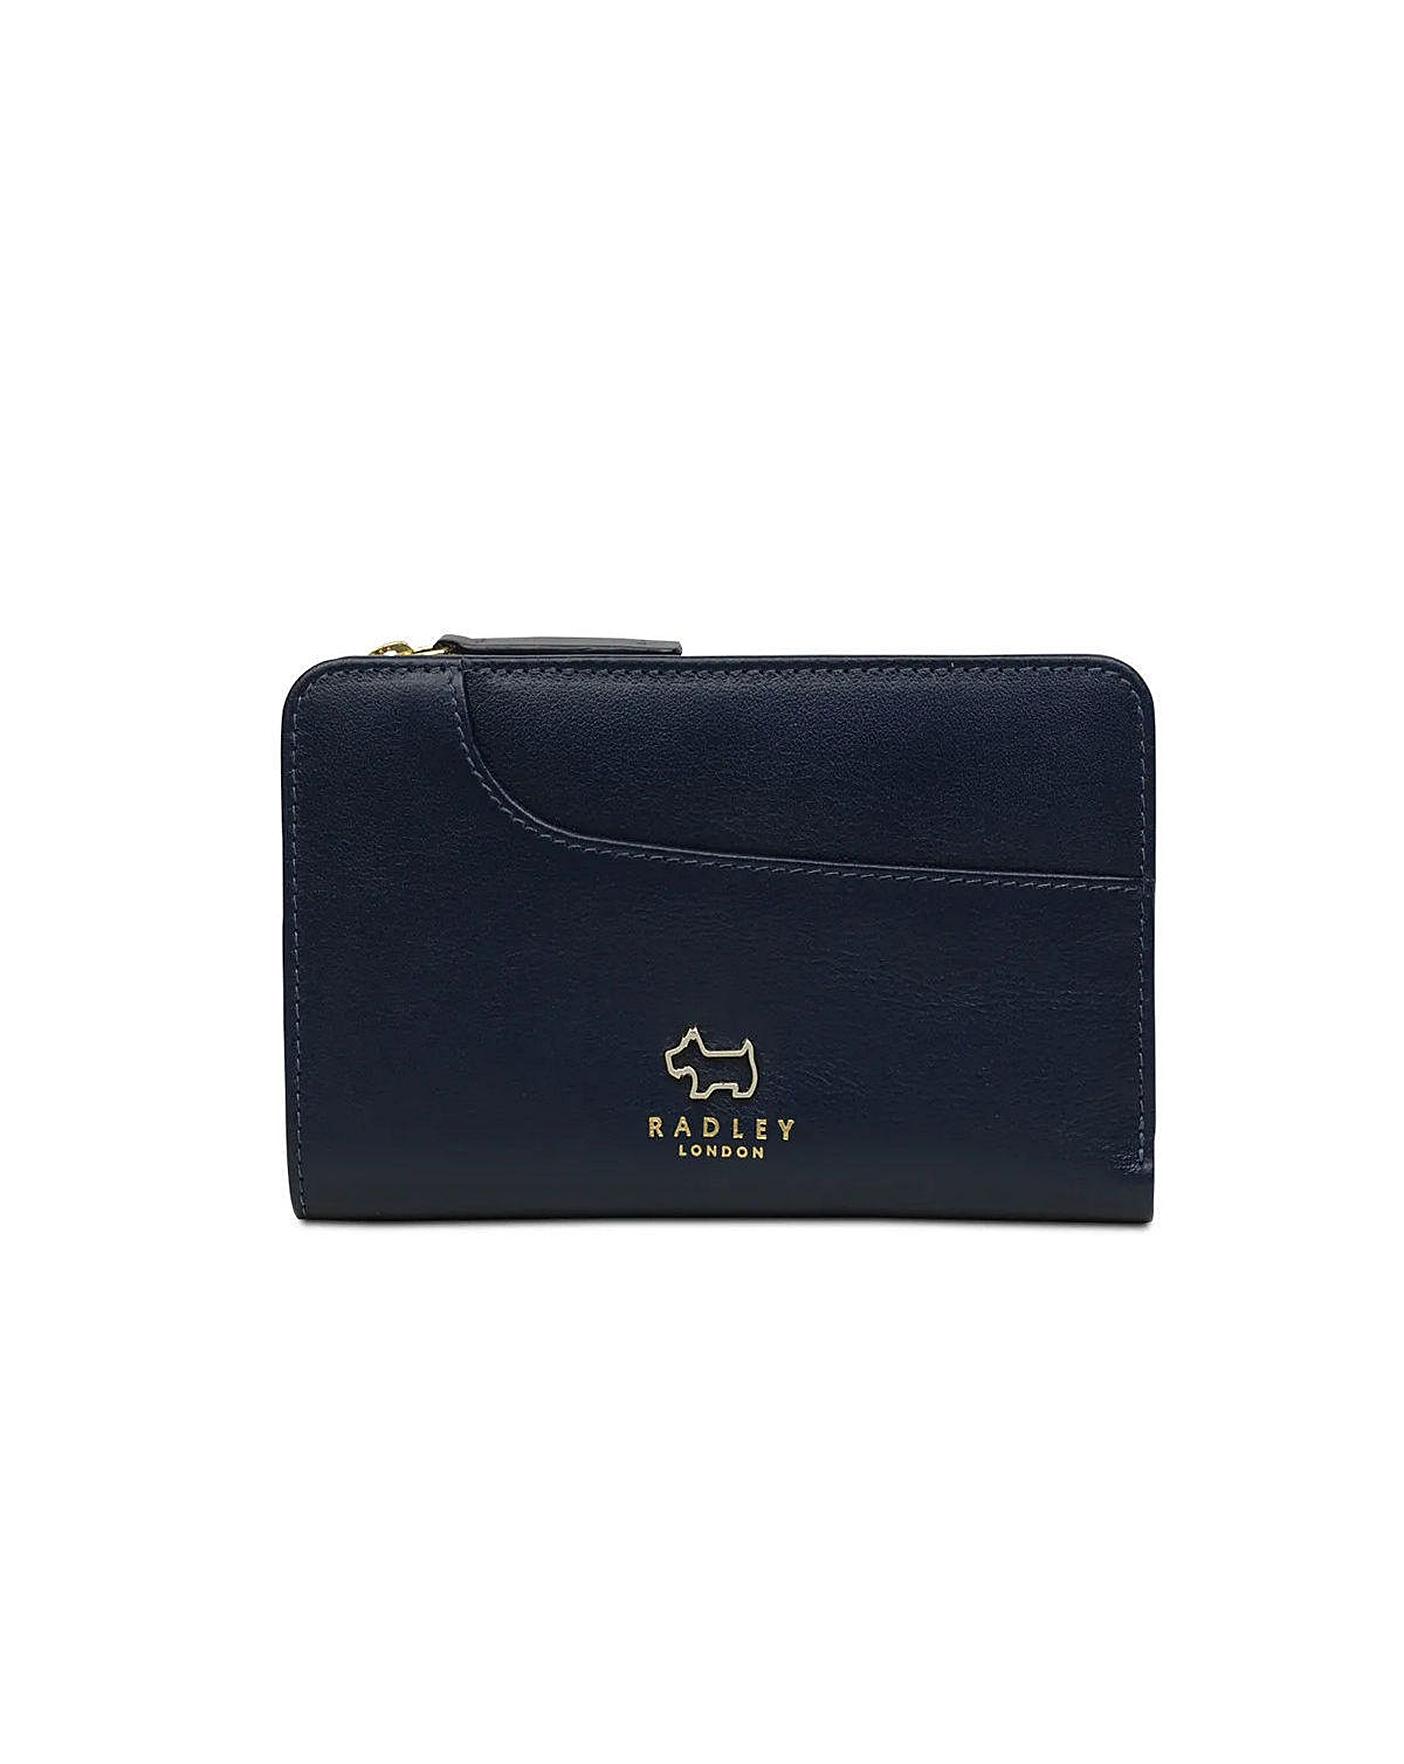 Radley London Pockets Phone Brown Crossbody Bag Women's Handbag L70332 |  eBay